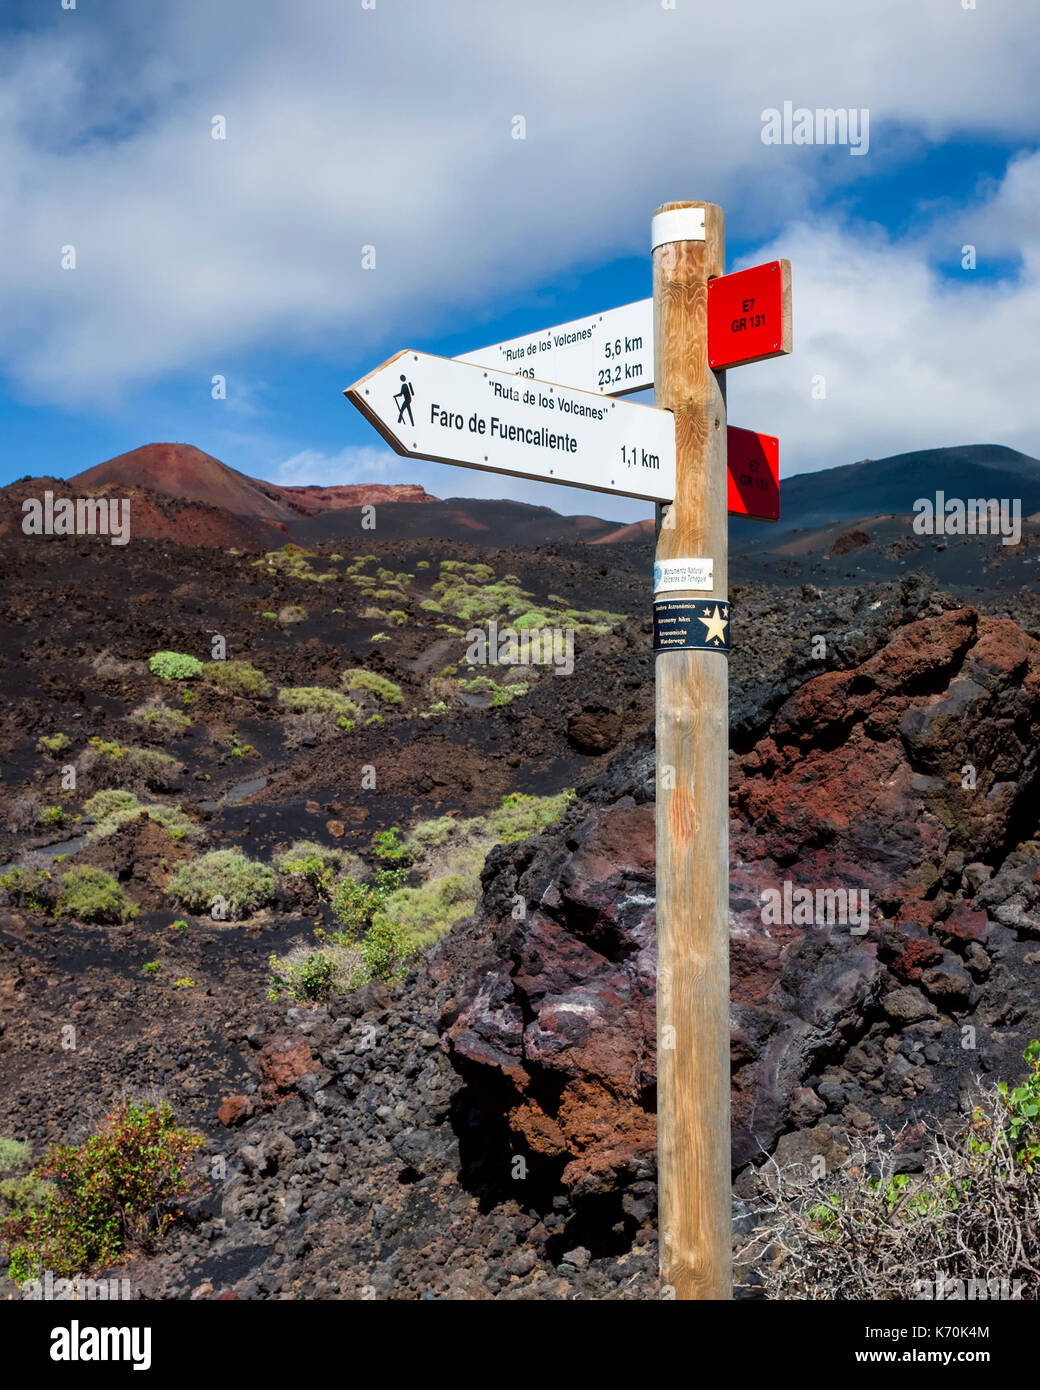 Los Volcanes de Teneguía, Cumbre Vieja. La Palma. National Park Schild E7, GR 131, zeigt die "Ruta de los Volcanes" und "Ruta de los Volcanes" für Wanderer auf eine der roten Routen. Stockfoto